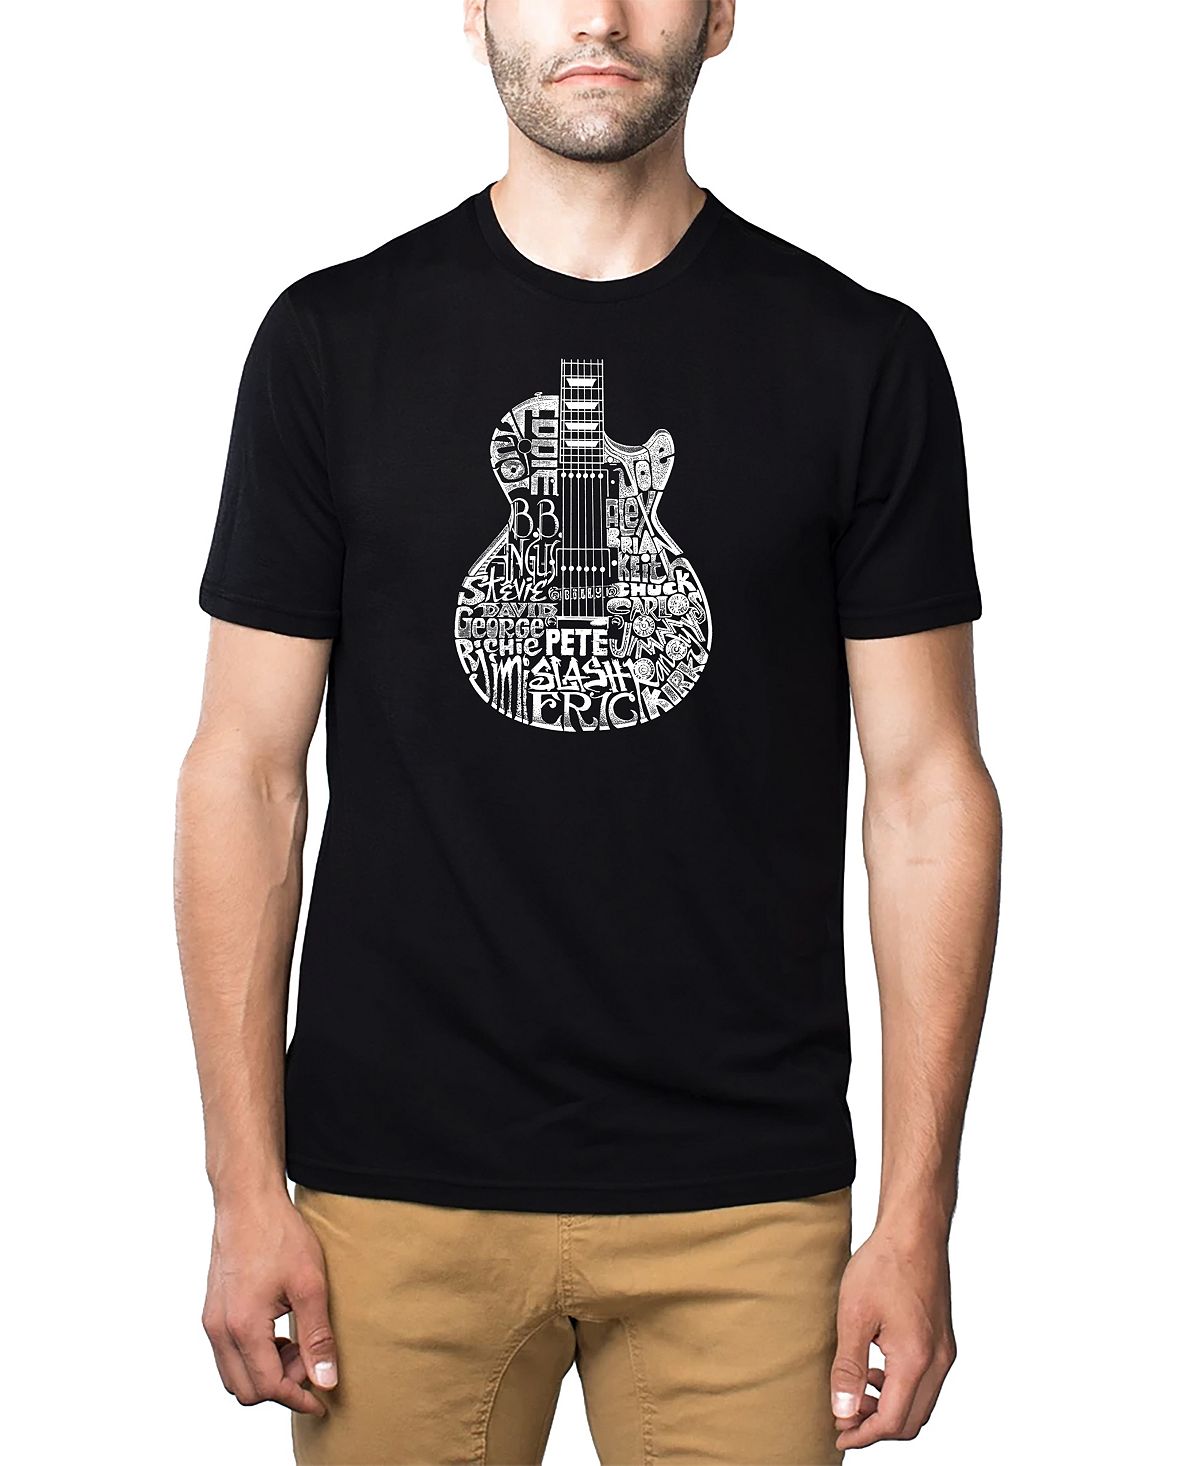 Мужская футболка premium blend word art rock guitar body word art футболка LA Pop Art, черный